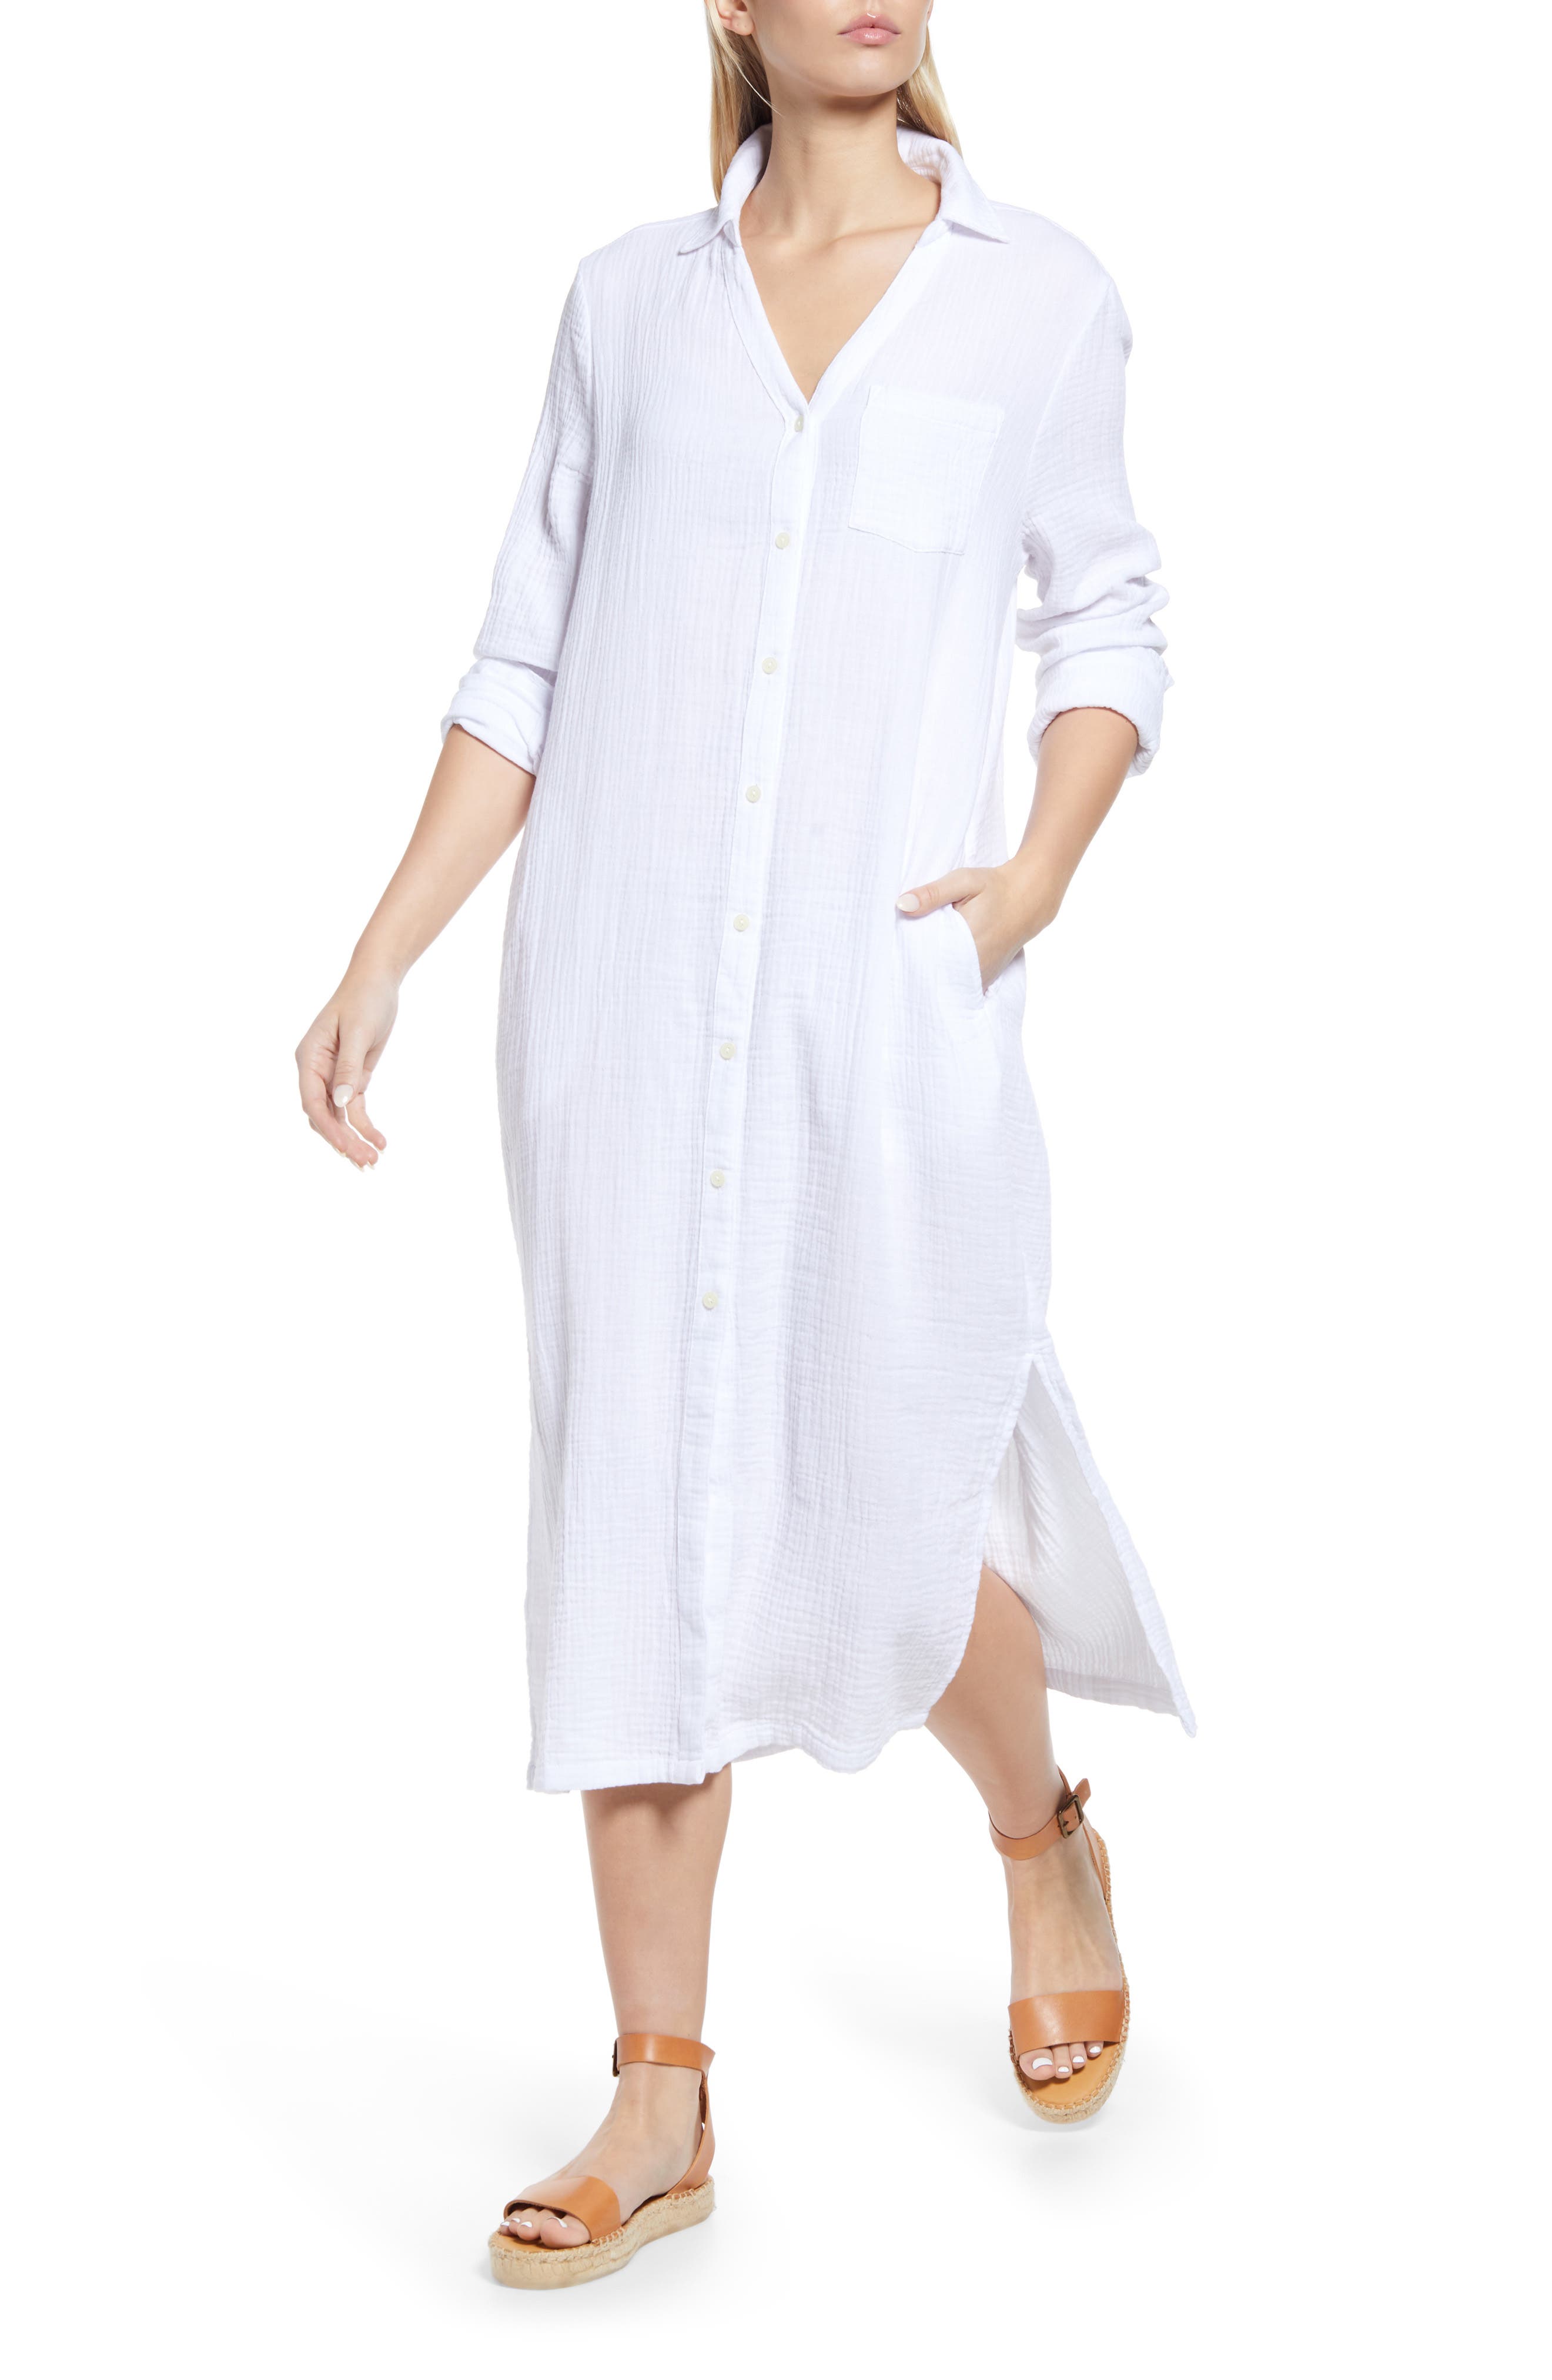 white cotton dresses | Nordstrom